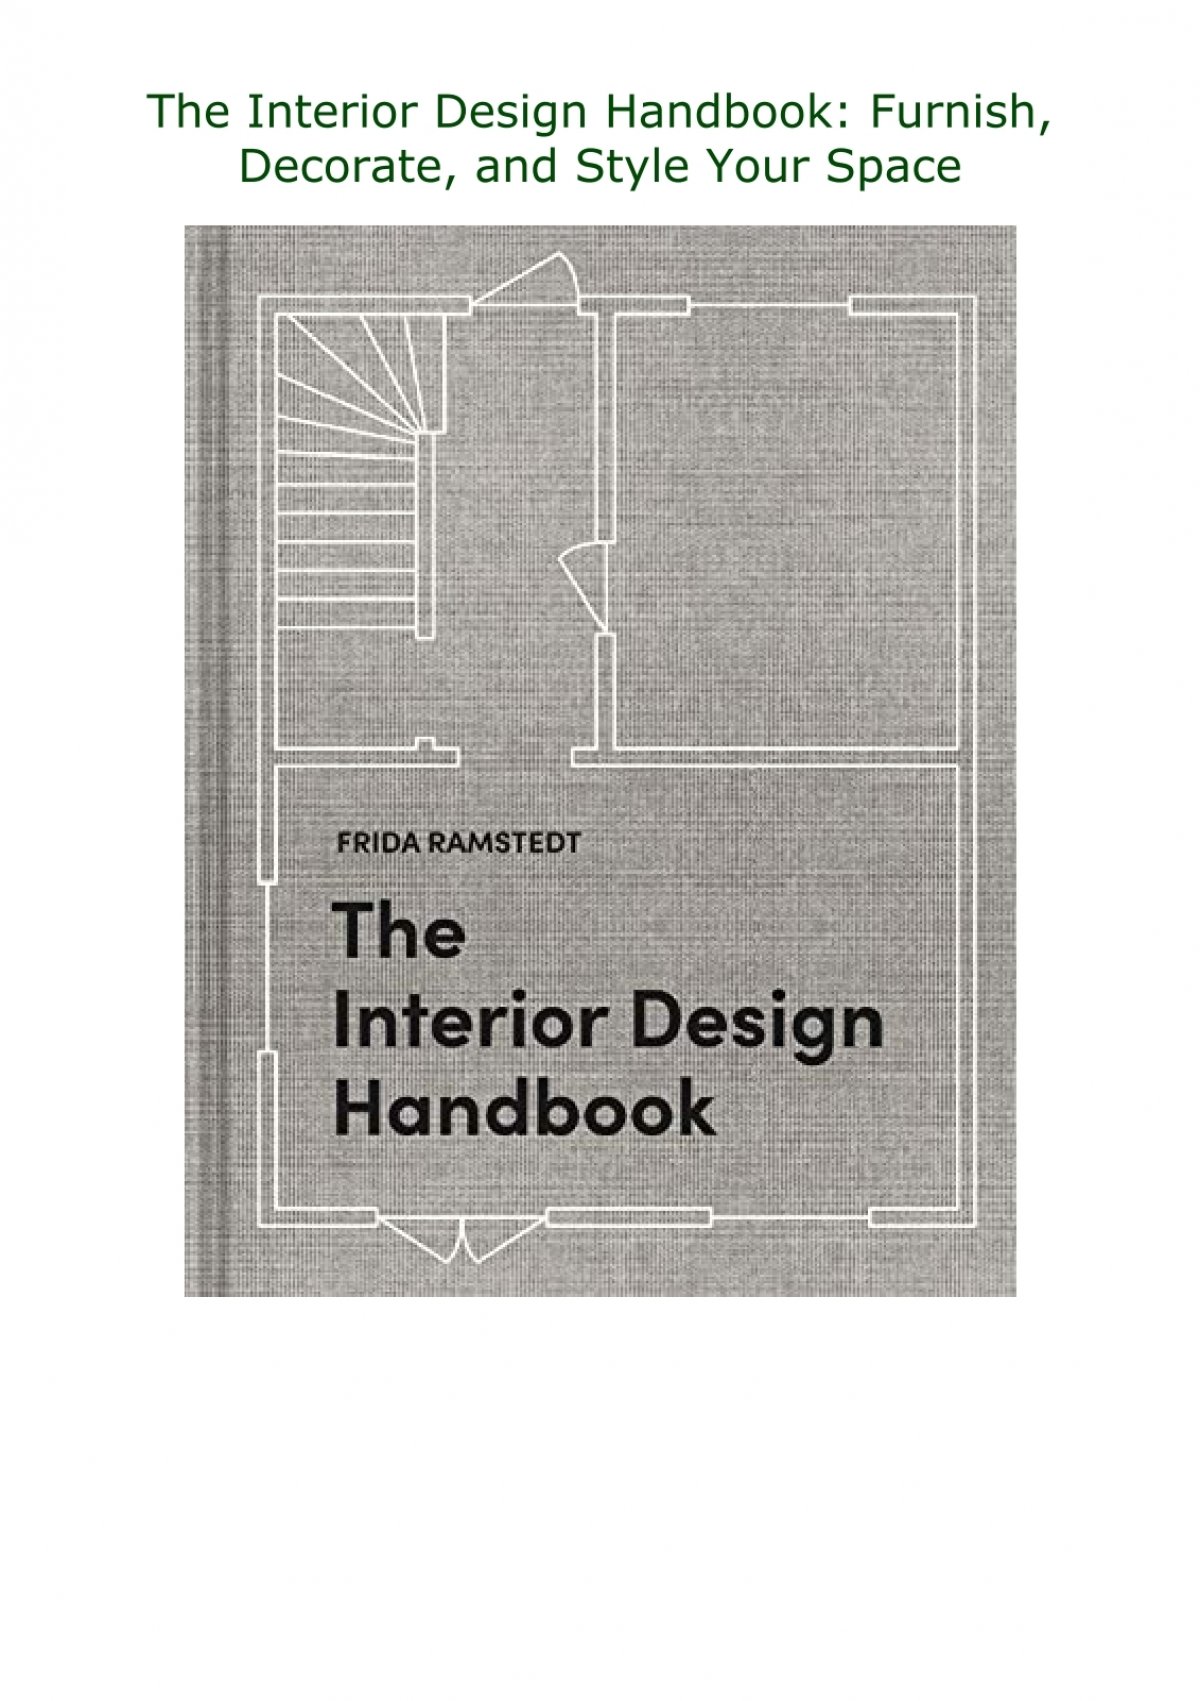 Pdf ️download ️ The Interior Design Handbook Furnish Decorate And